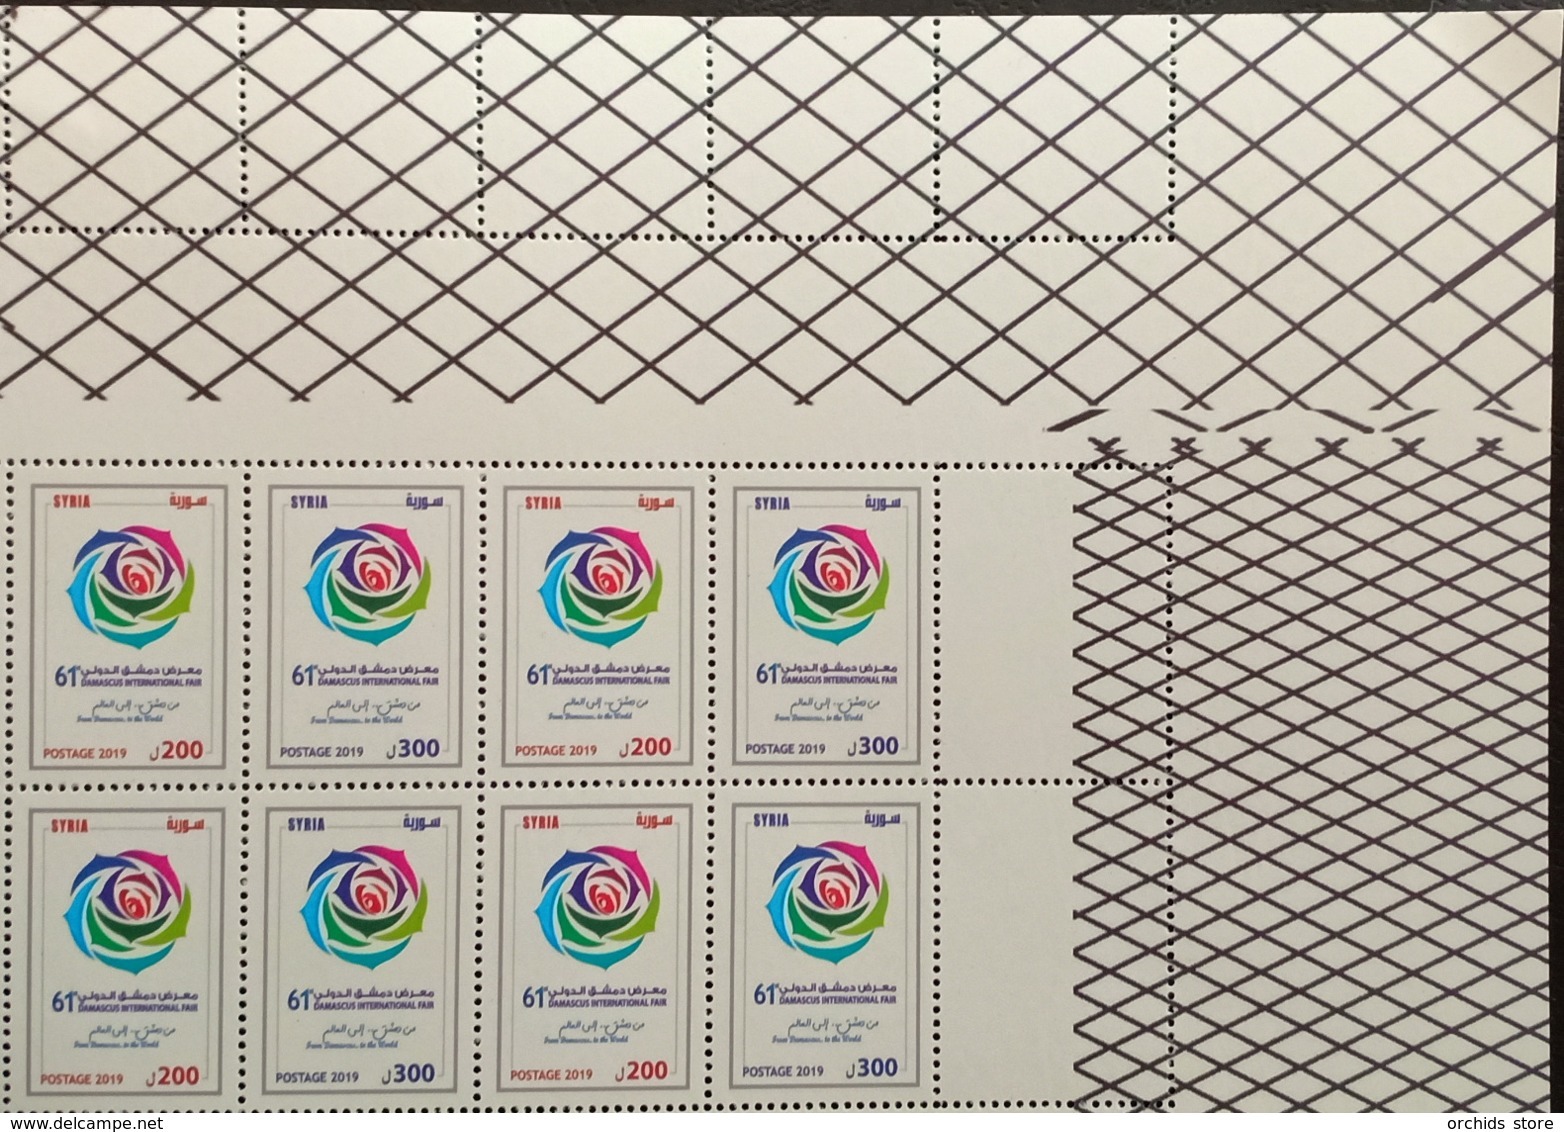 Syria 2019 NEW MNH Stamps - 61st Damascus International Fair, Flower - Corner Blk-4 - Syria